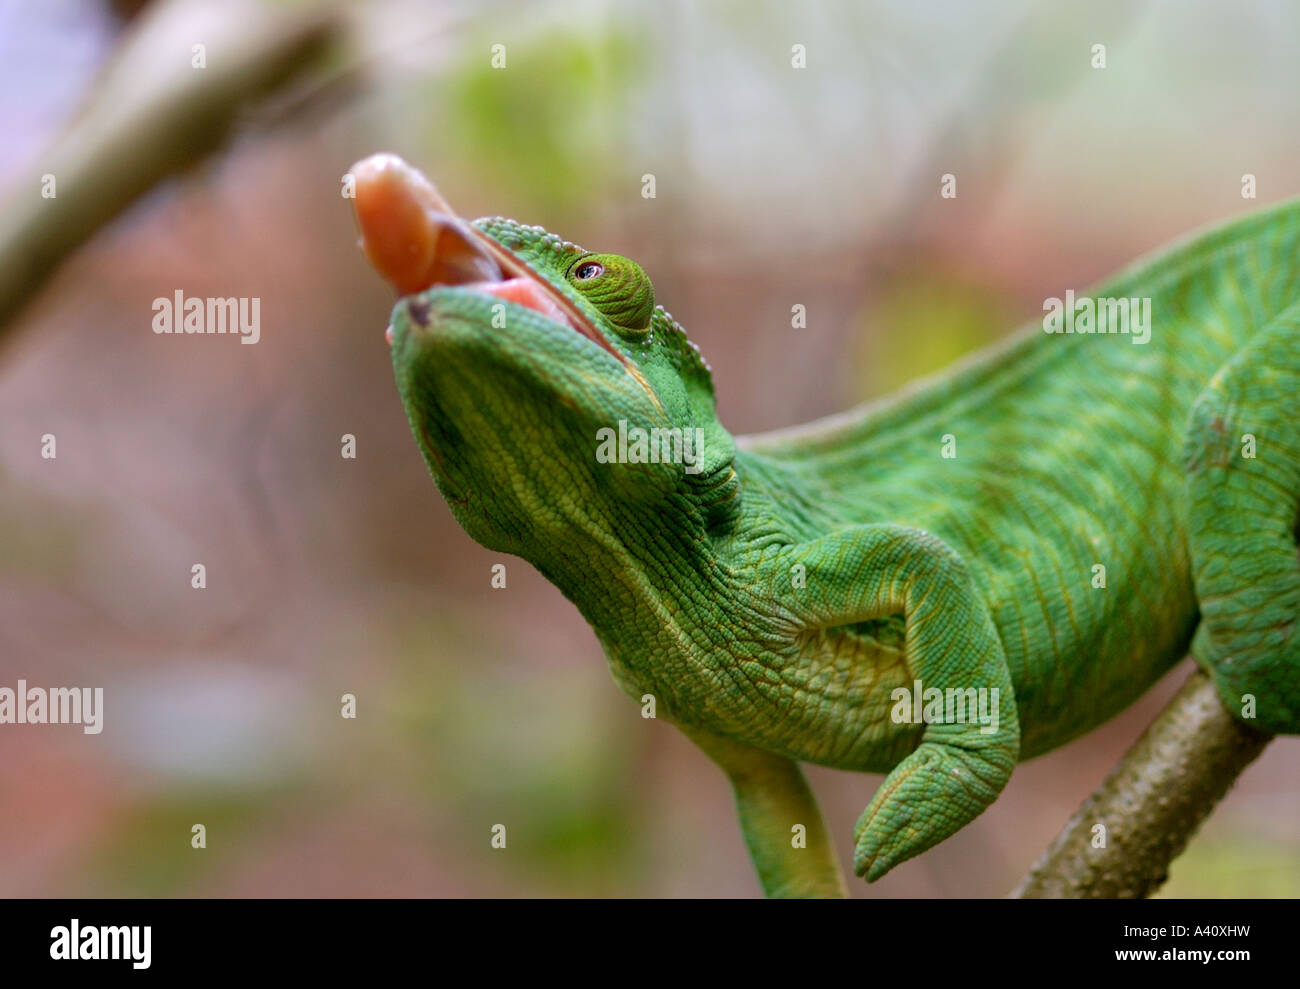 Chameleon pushing out extensile tongue to feed Madagascar Stock Photo